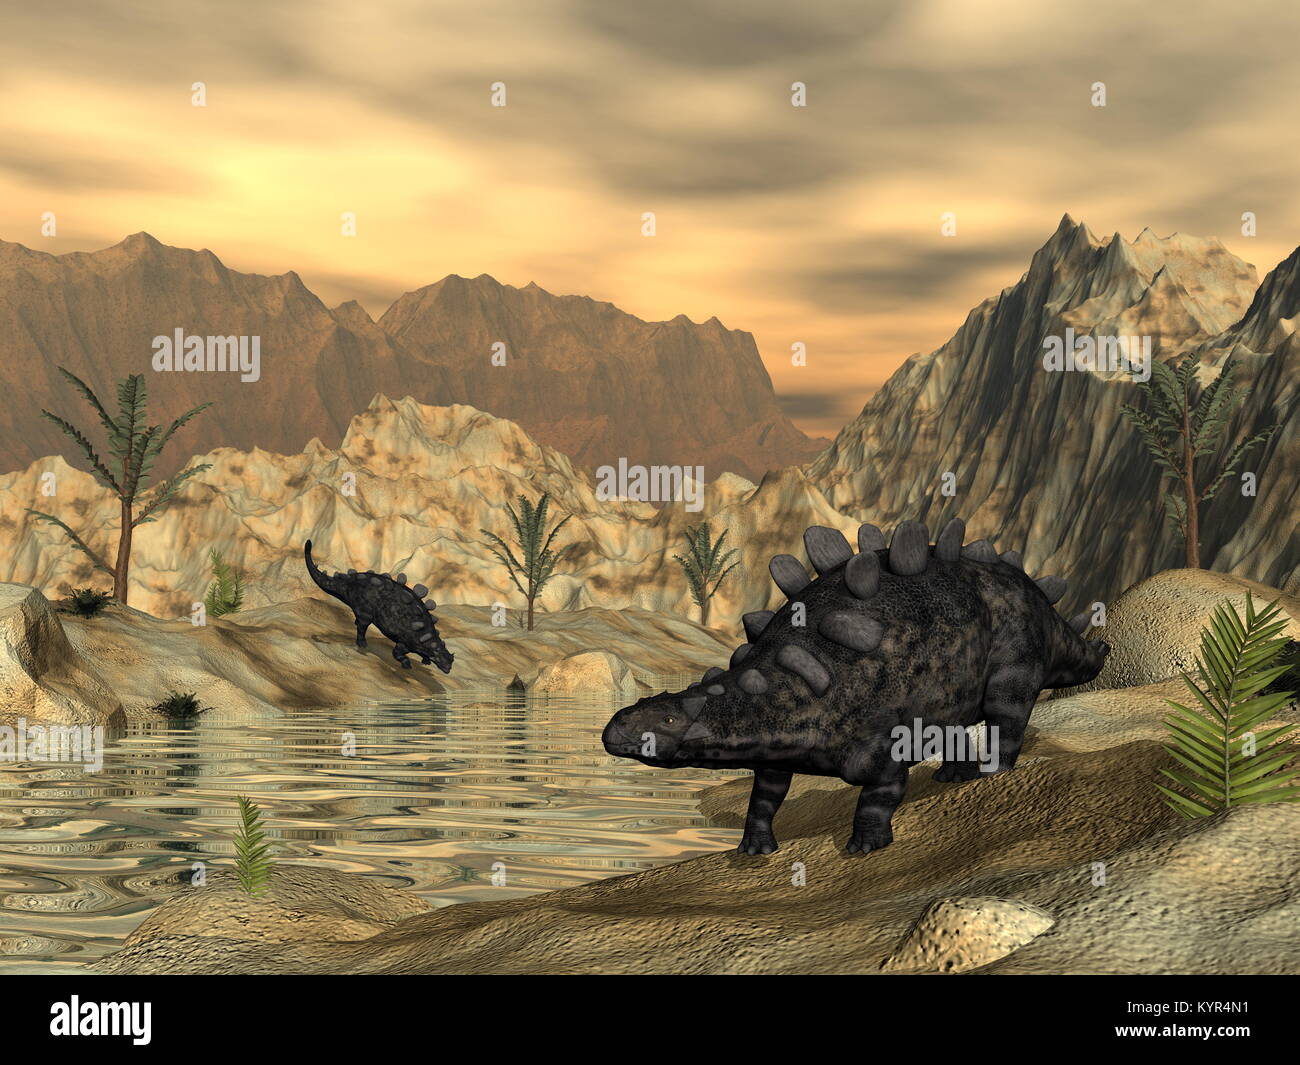 Chrichtonsaurus dinosaur next to a pond in the desert by sunset - 3D render Stock Photo